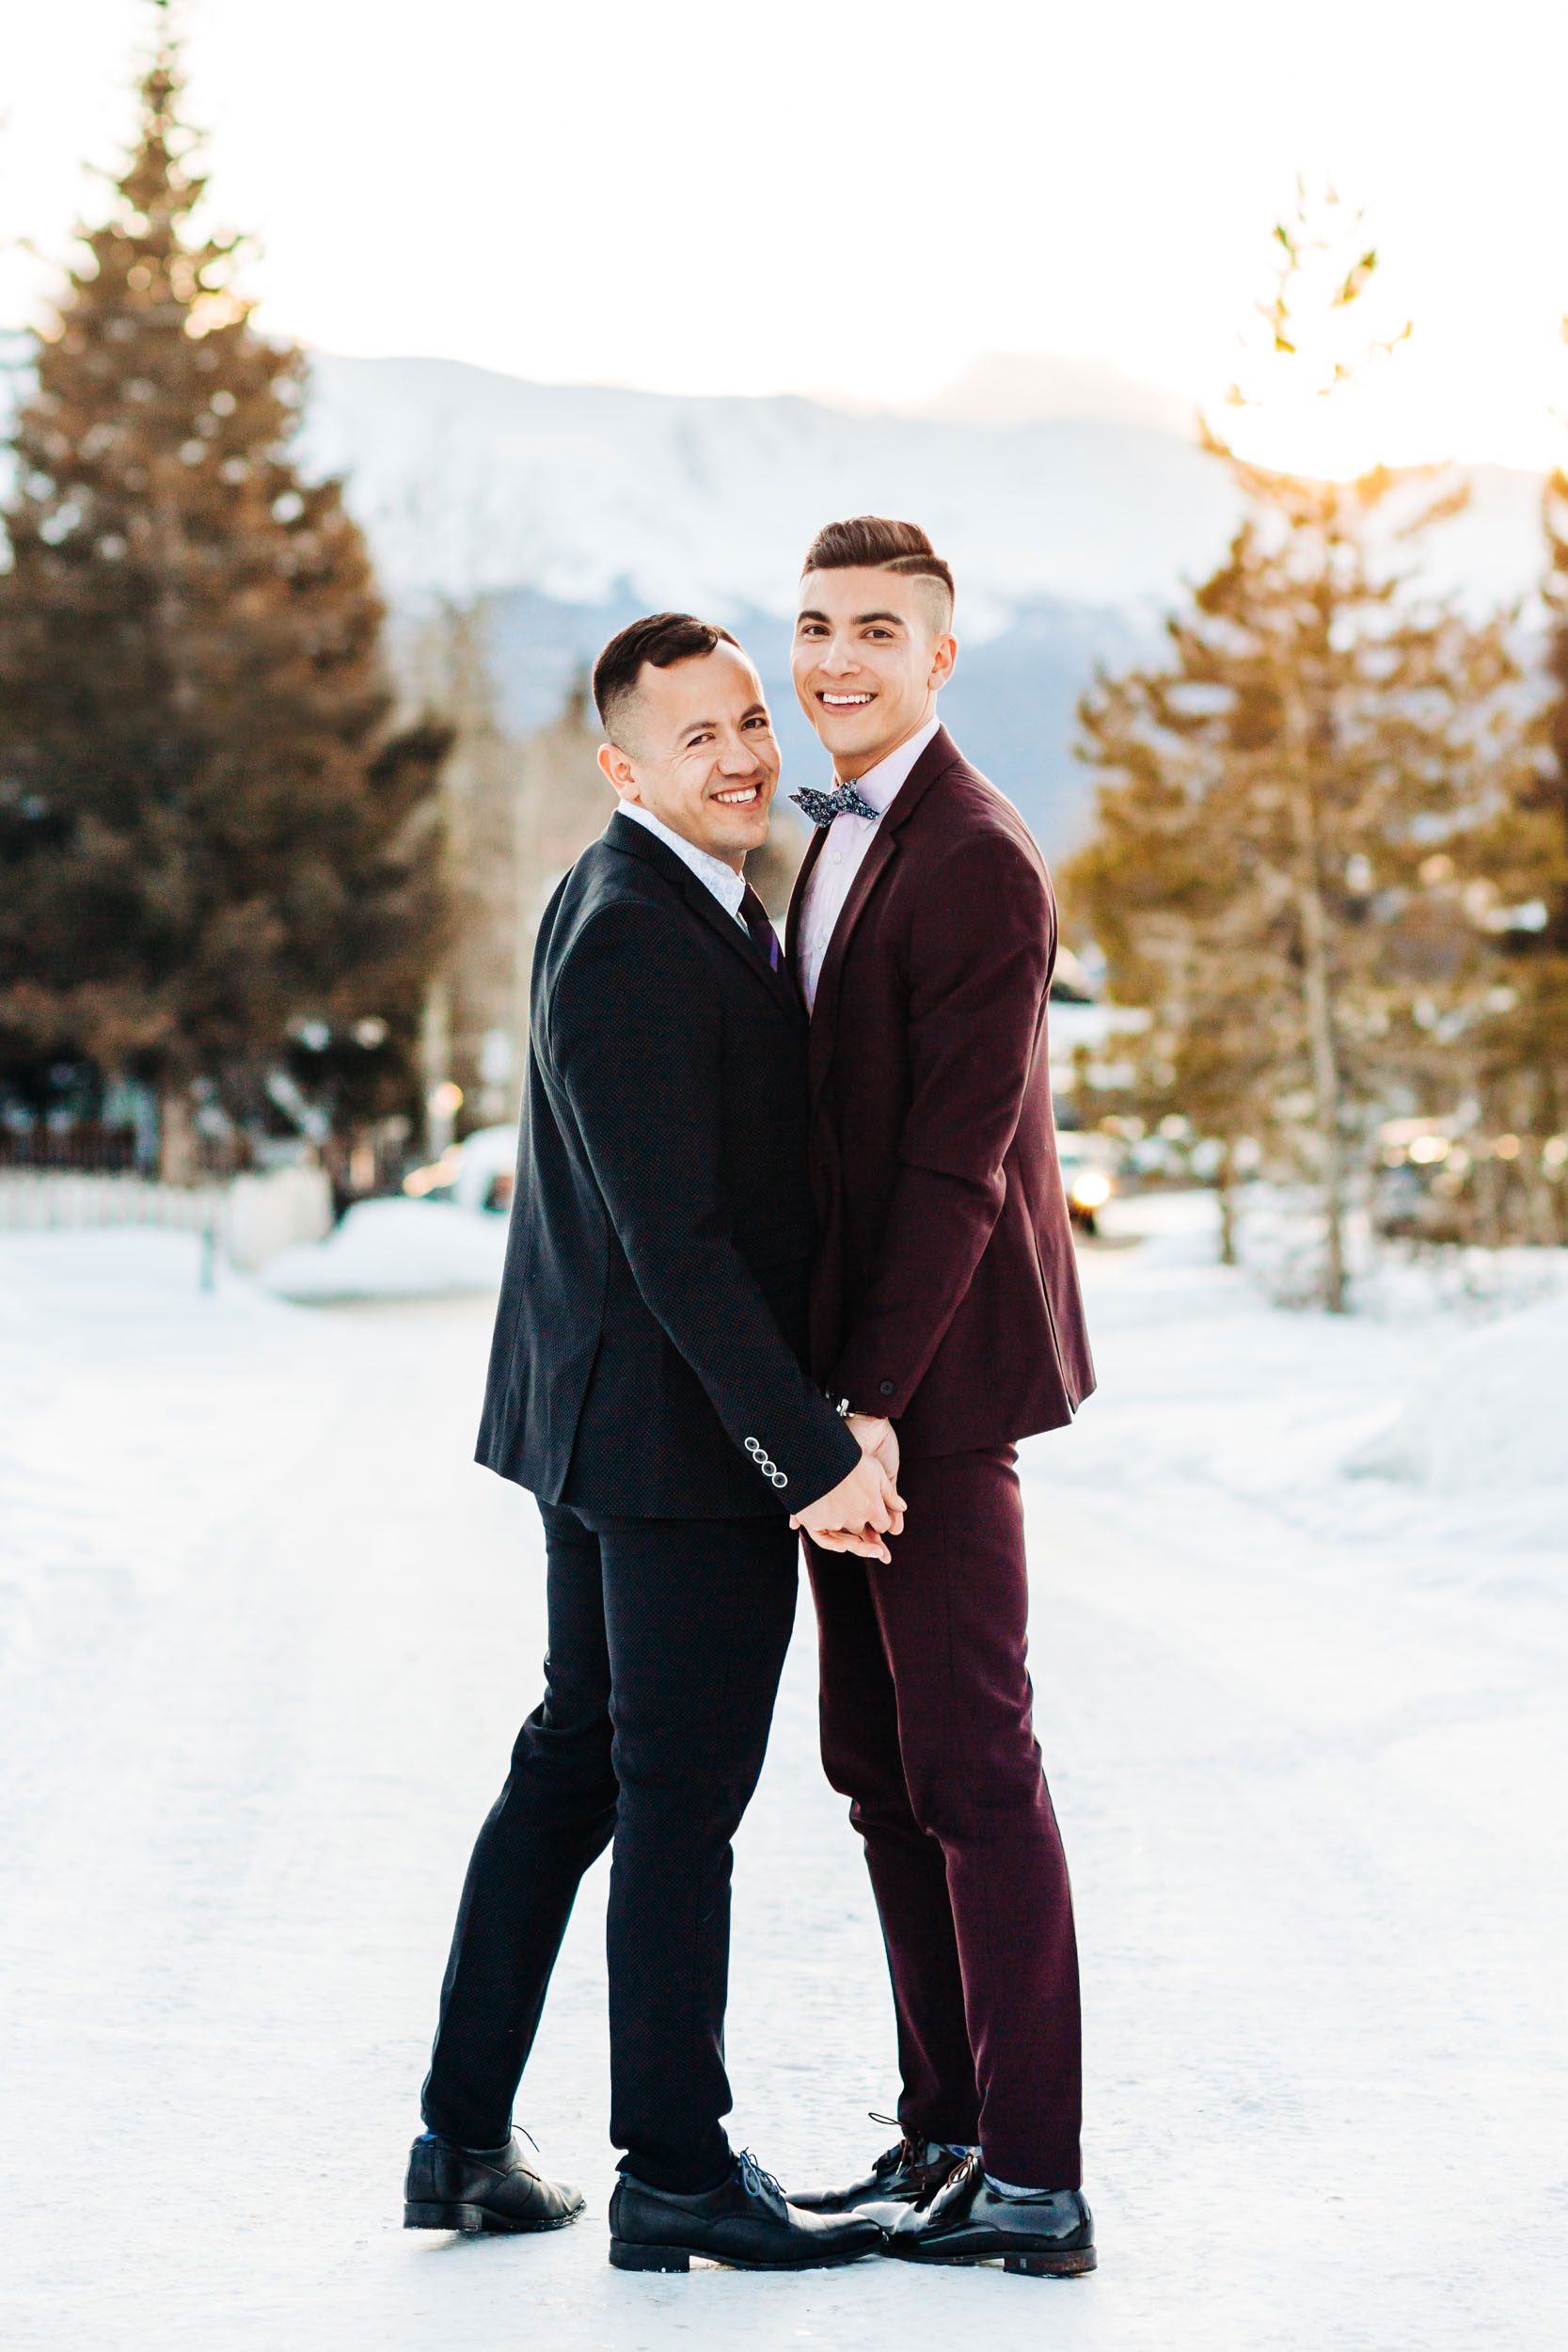 LGBTQ friendly Colorado wedding photographer